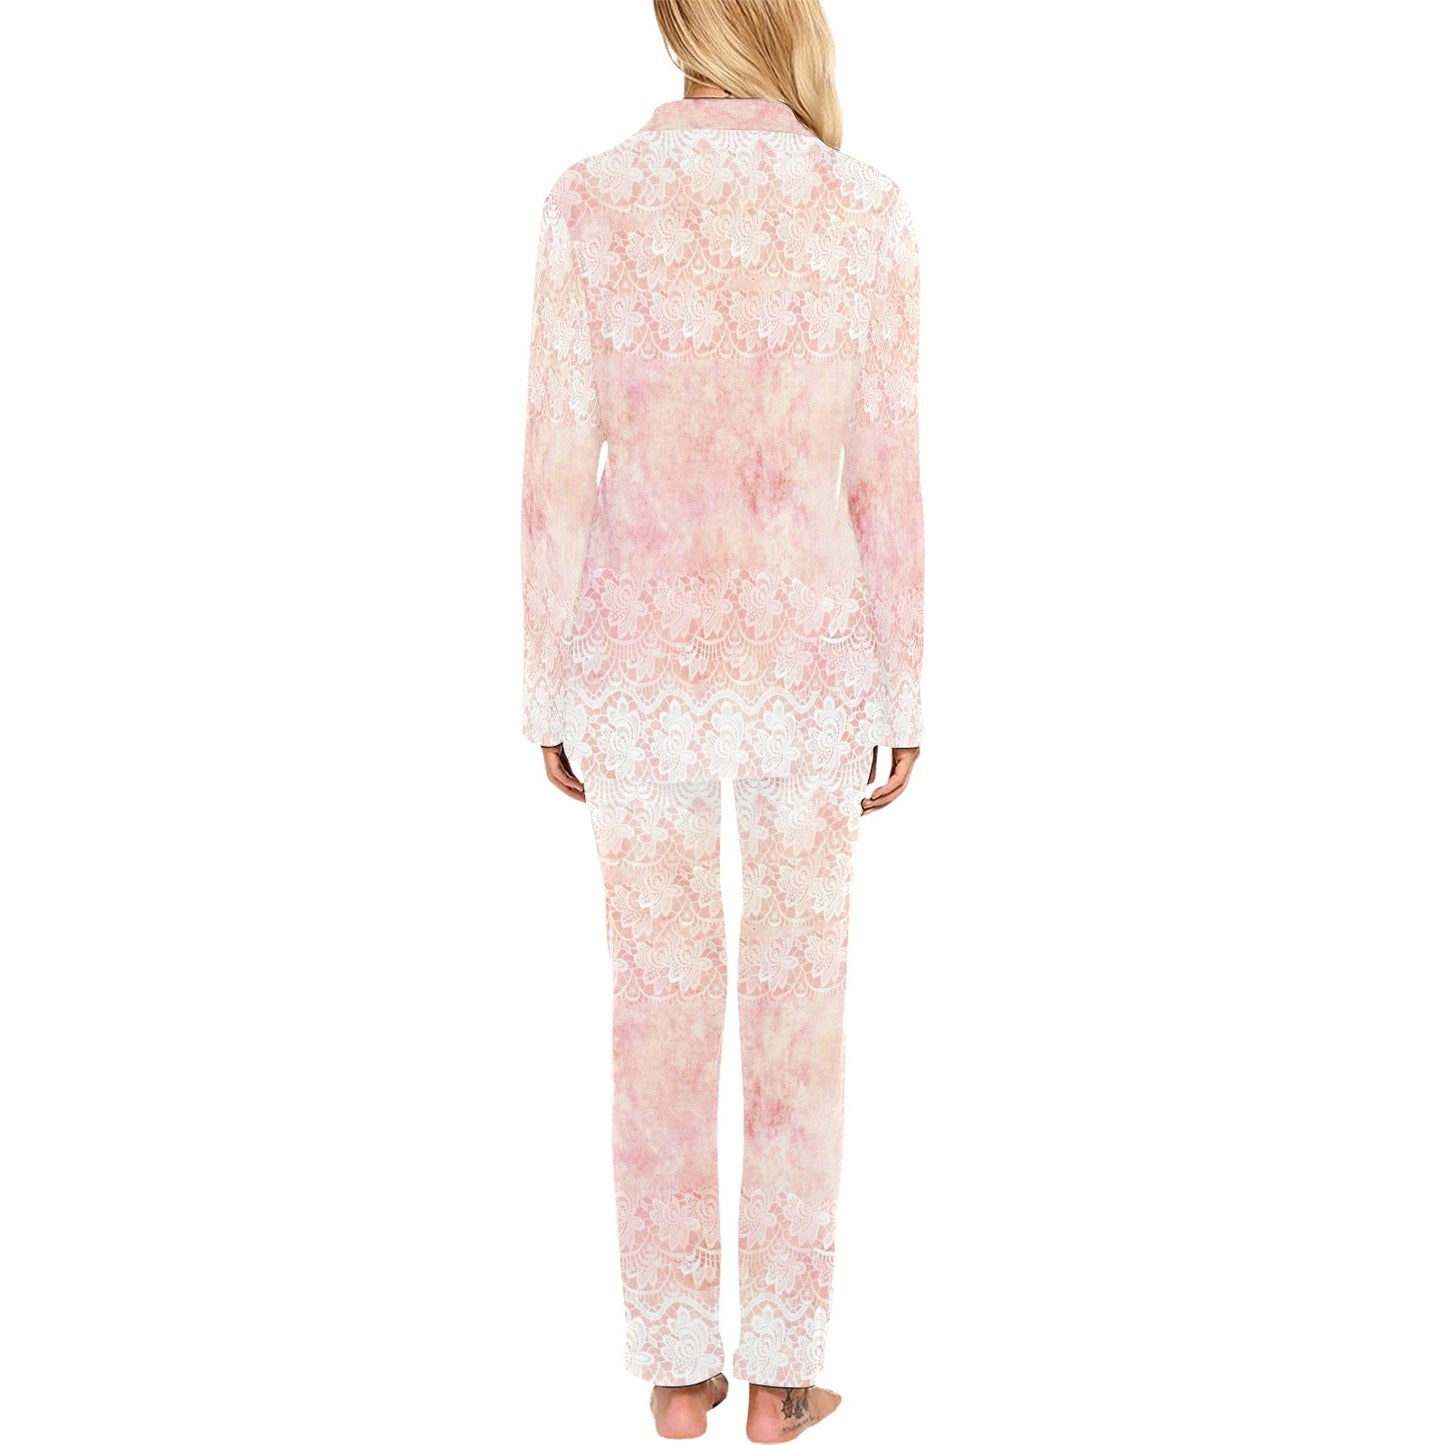 Victorian printed lace pajama set, design 38 Women's Long Pajama Set (Sets 02)